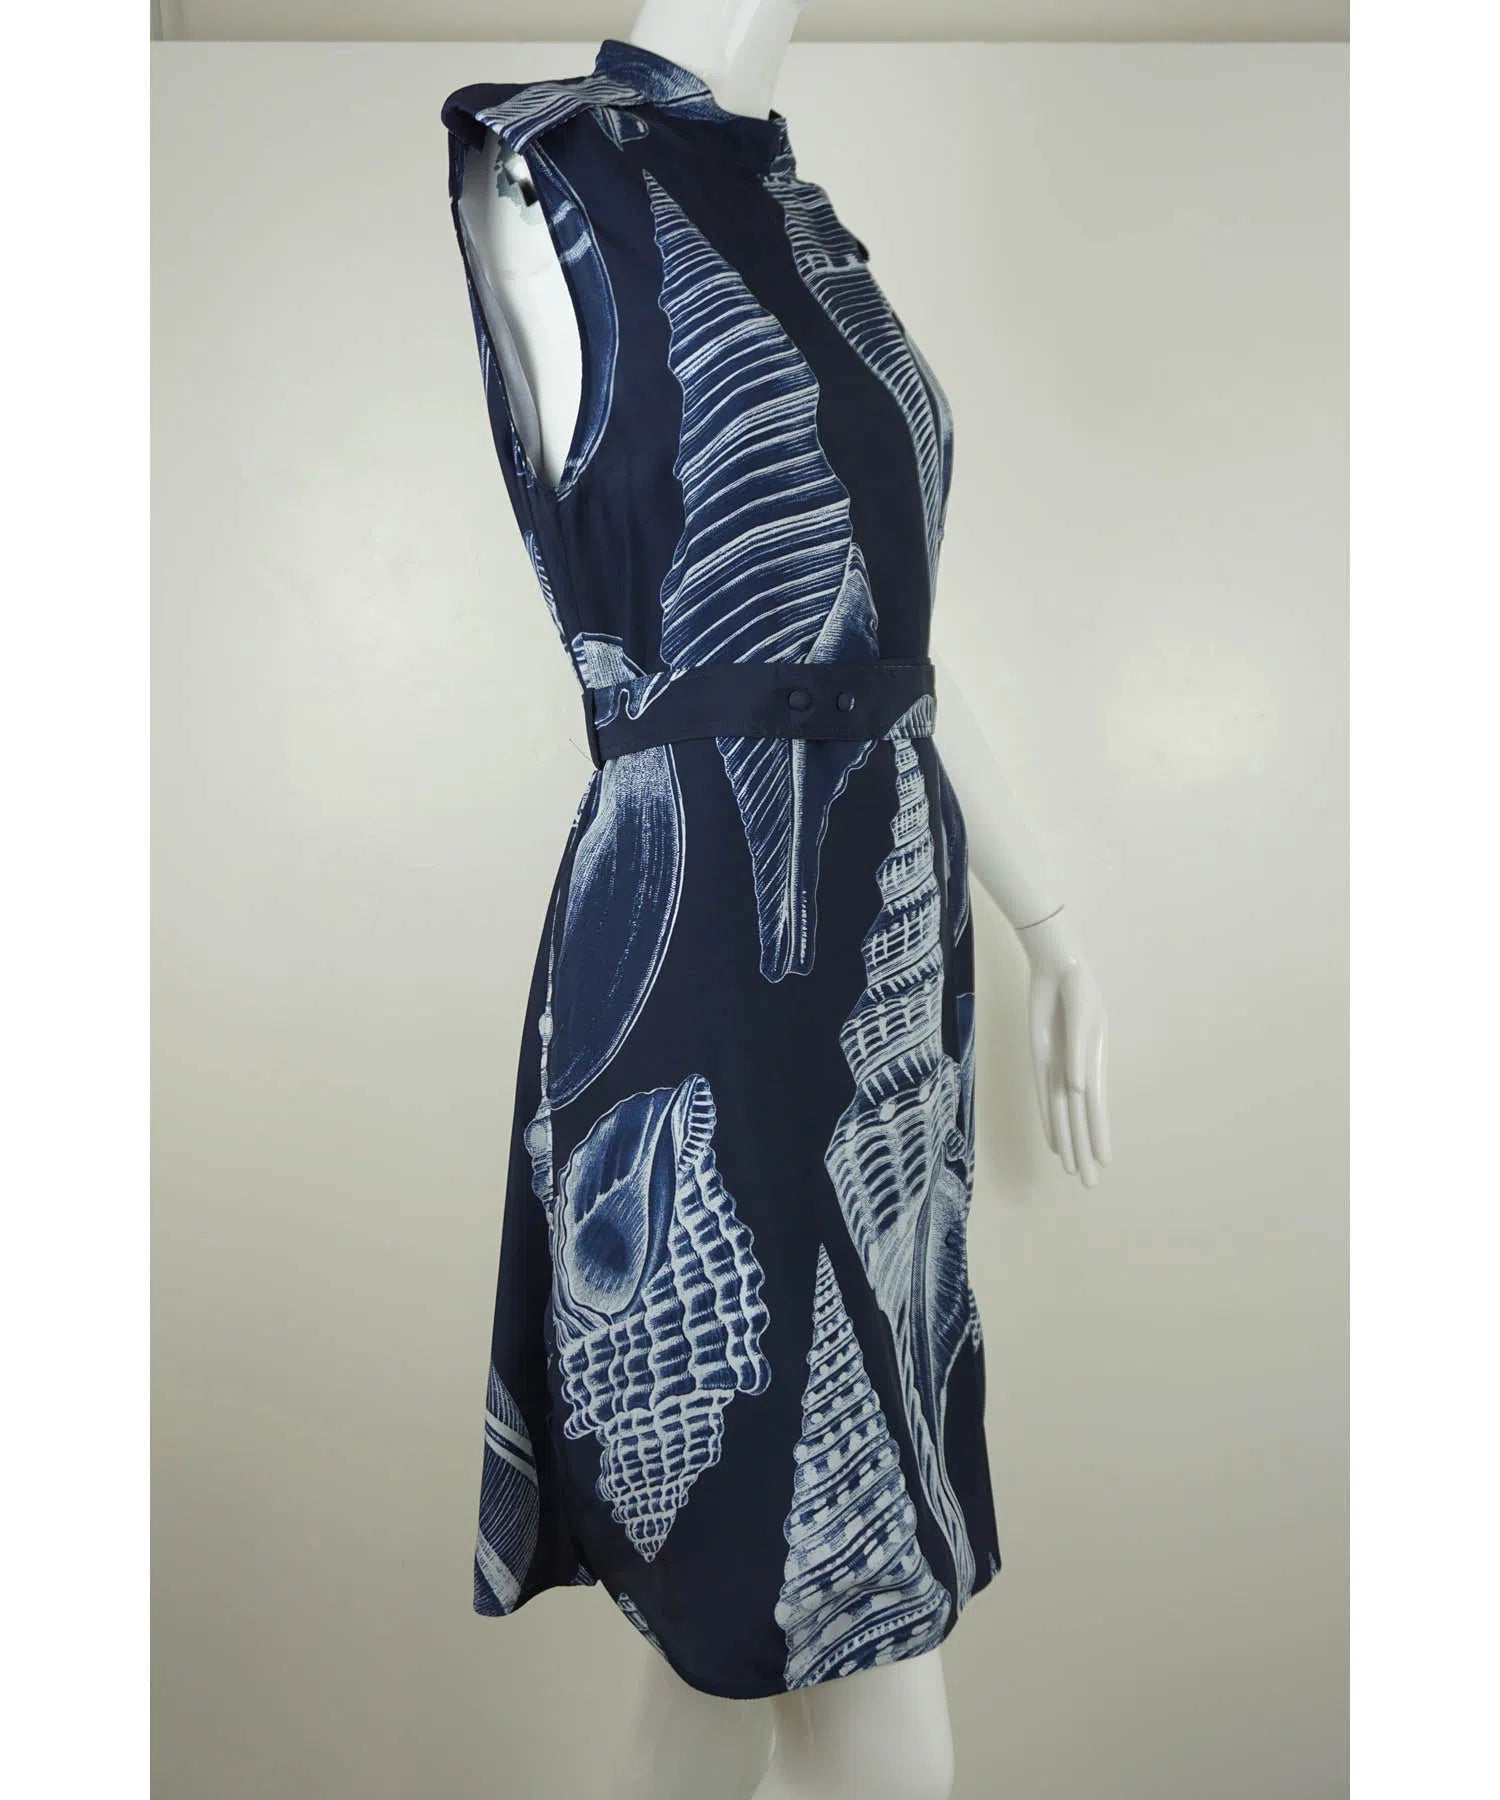 Stella McCartney Conch Shell Print Dress 38/4